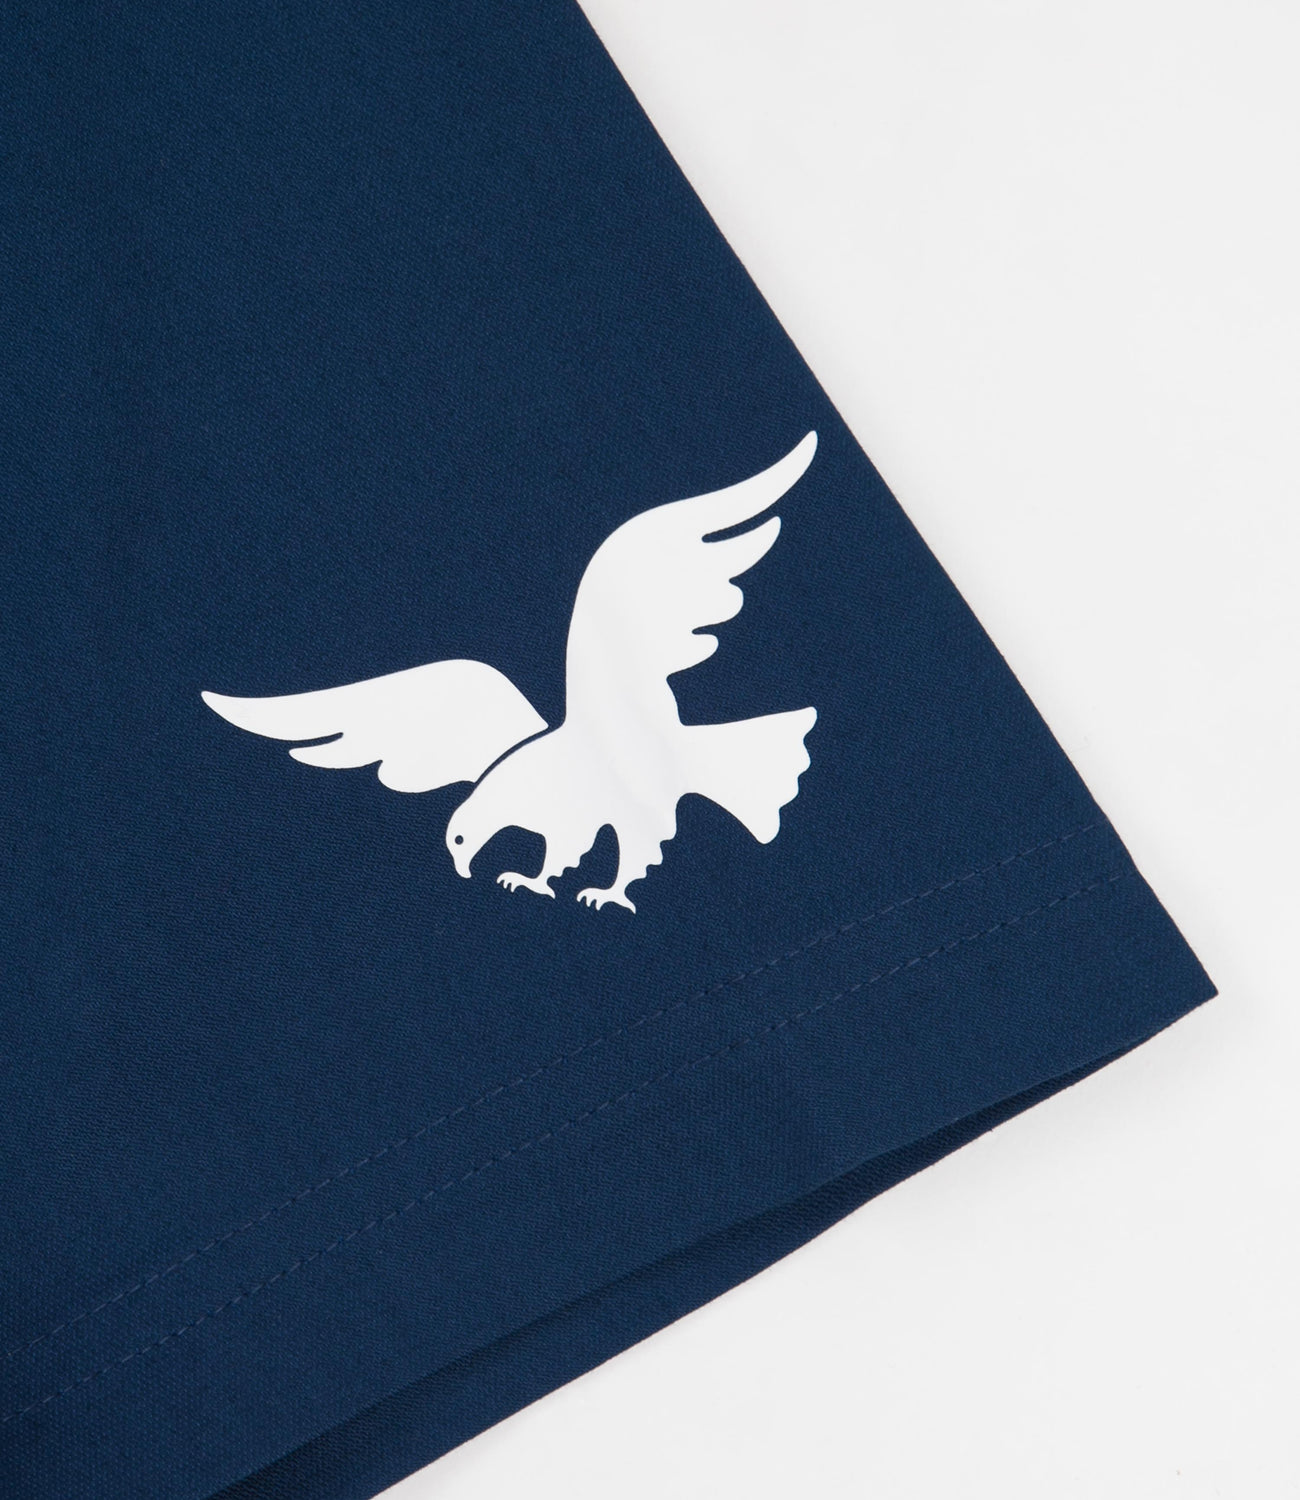 Nike SB x Parra 'USA Federation Kit' Coveralls - Brave Blue